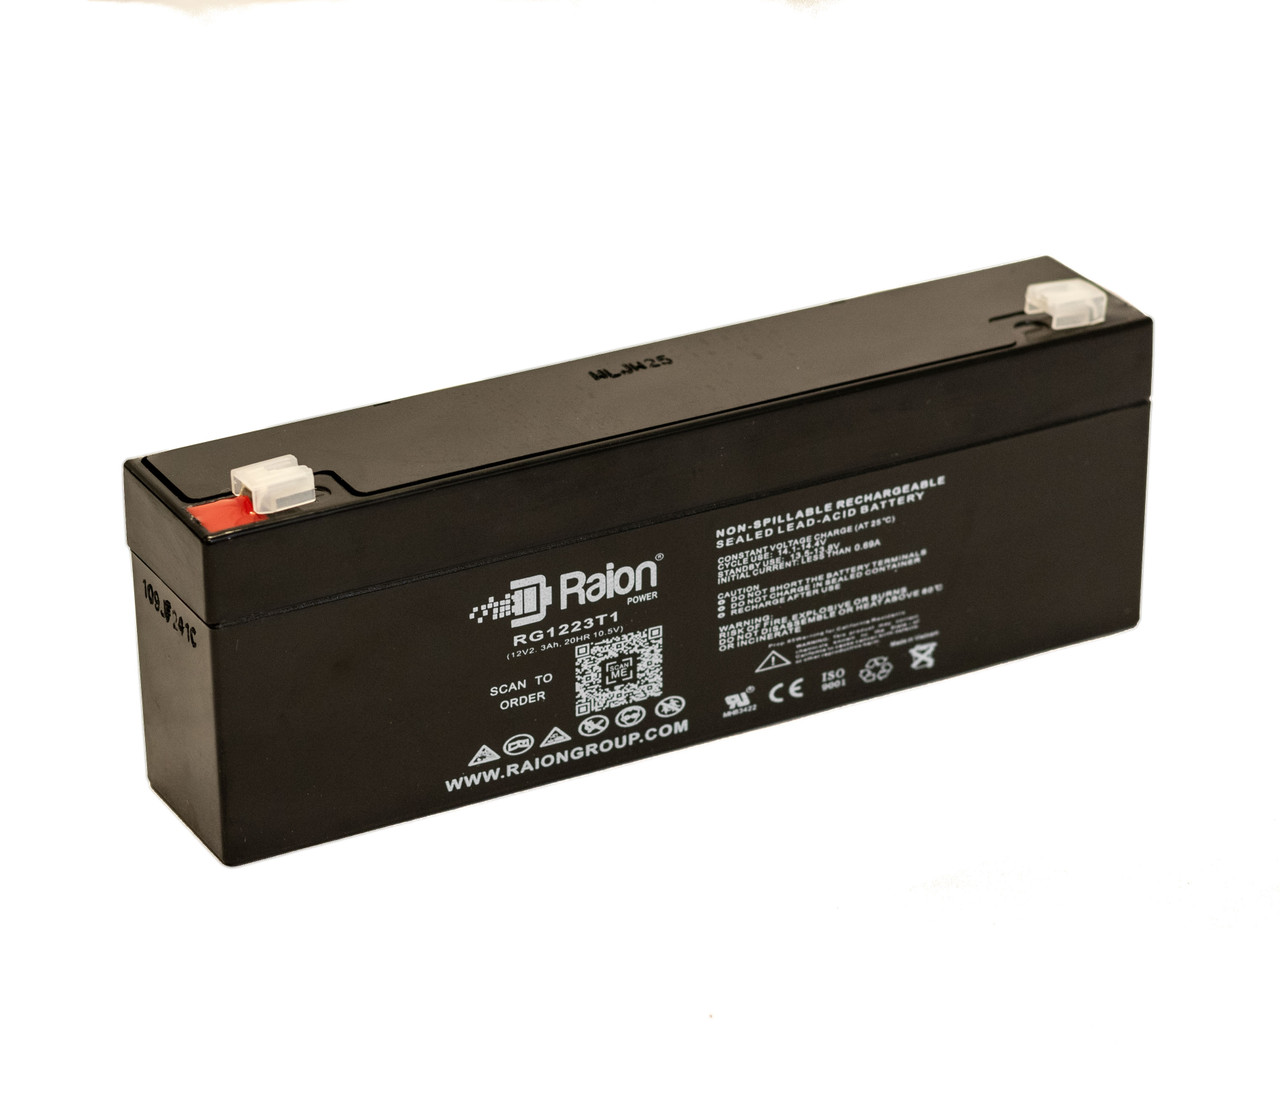 Raion Power RG1223T1 Replacement Emergency Light Battery for Sonnenschein A312/1.8S